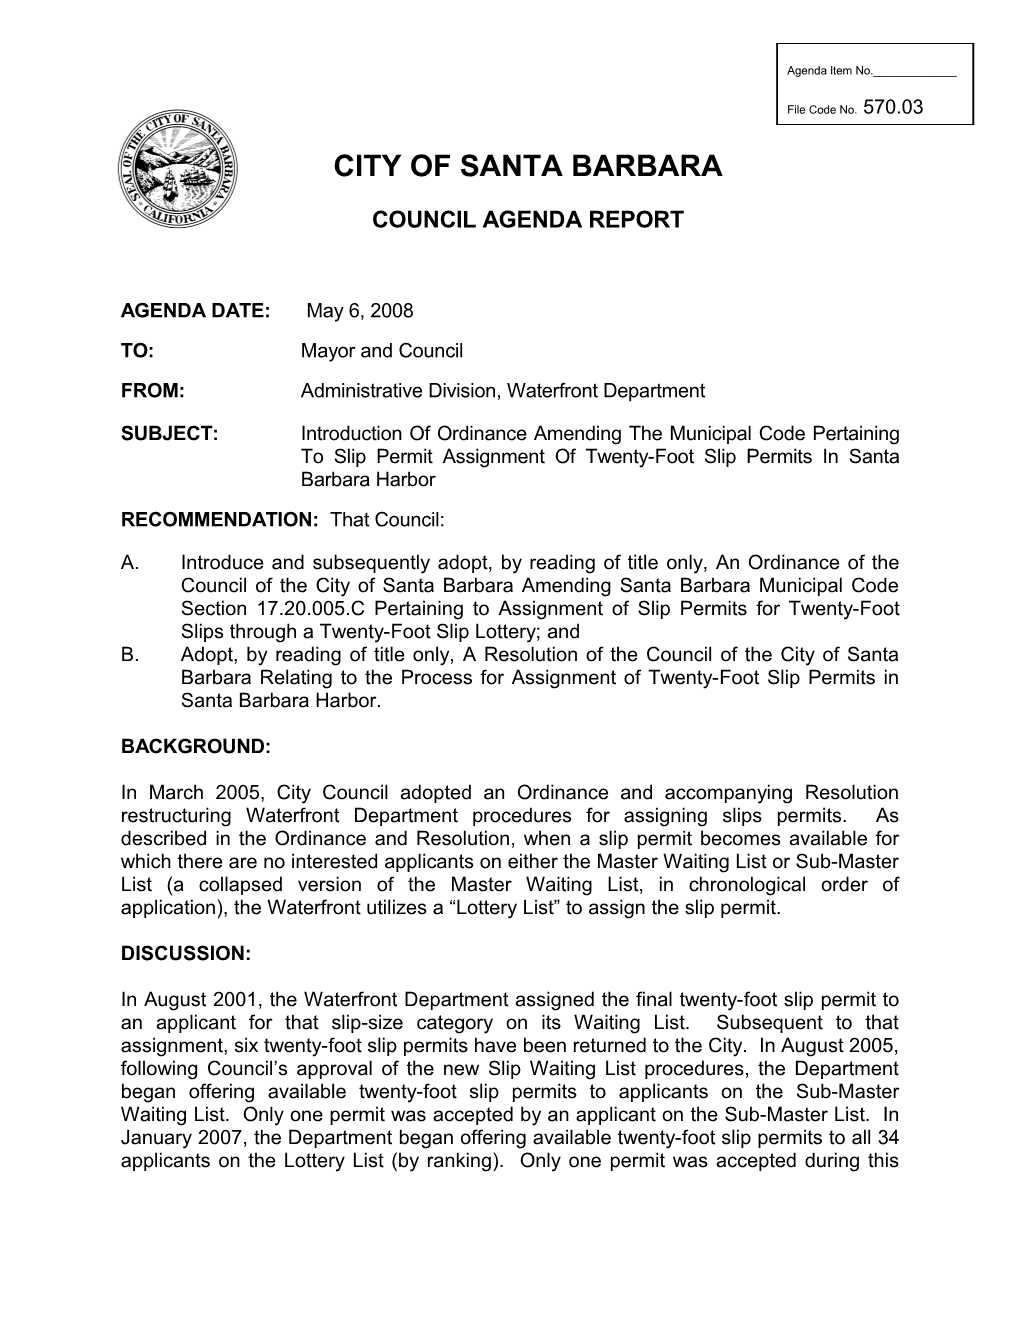 City of Santa Barbara s28